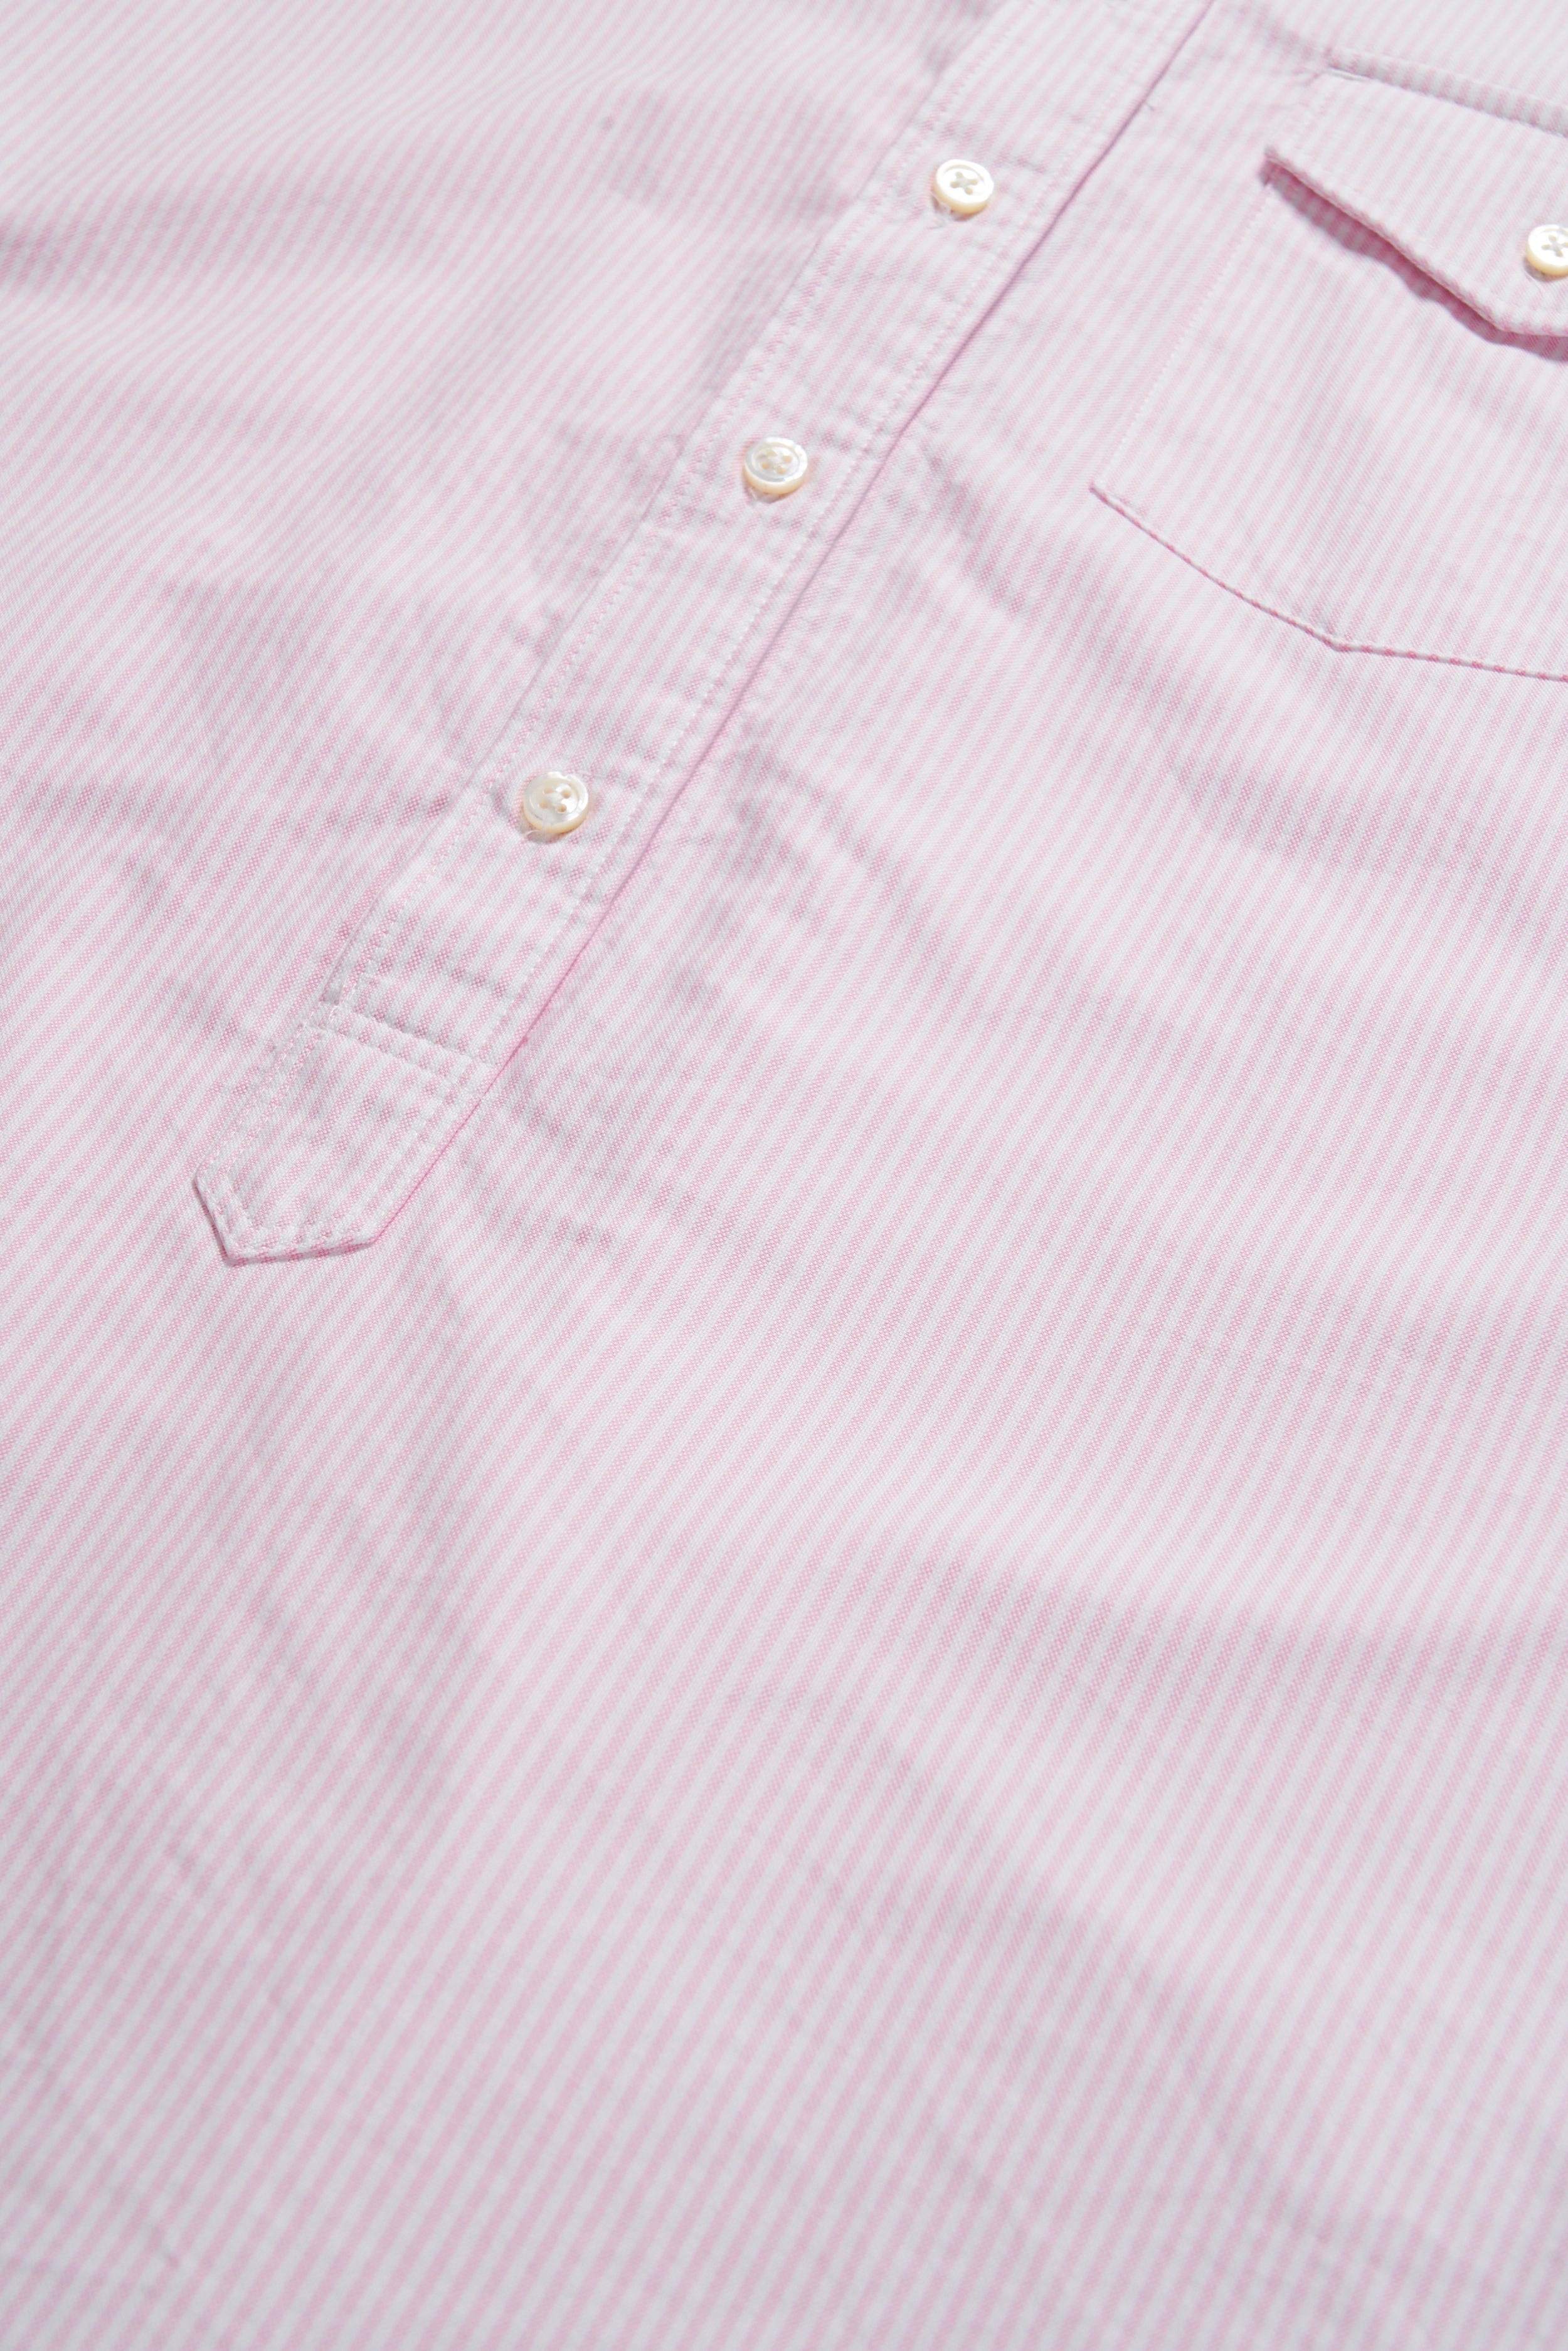 Ivy BD Shirt - Pink Candy Stripe Oxford